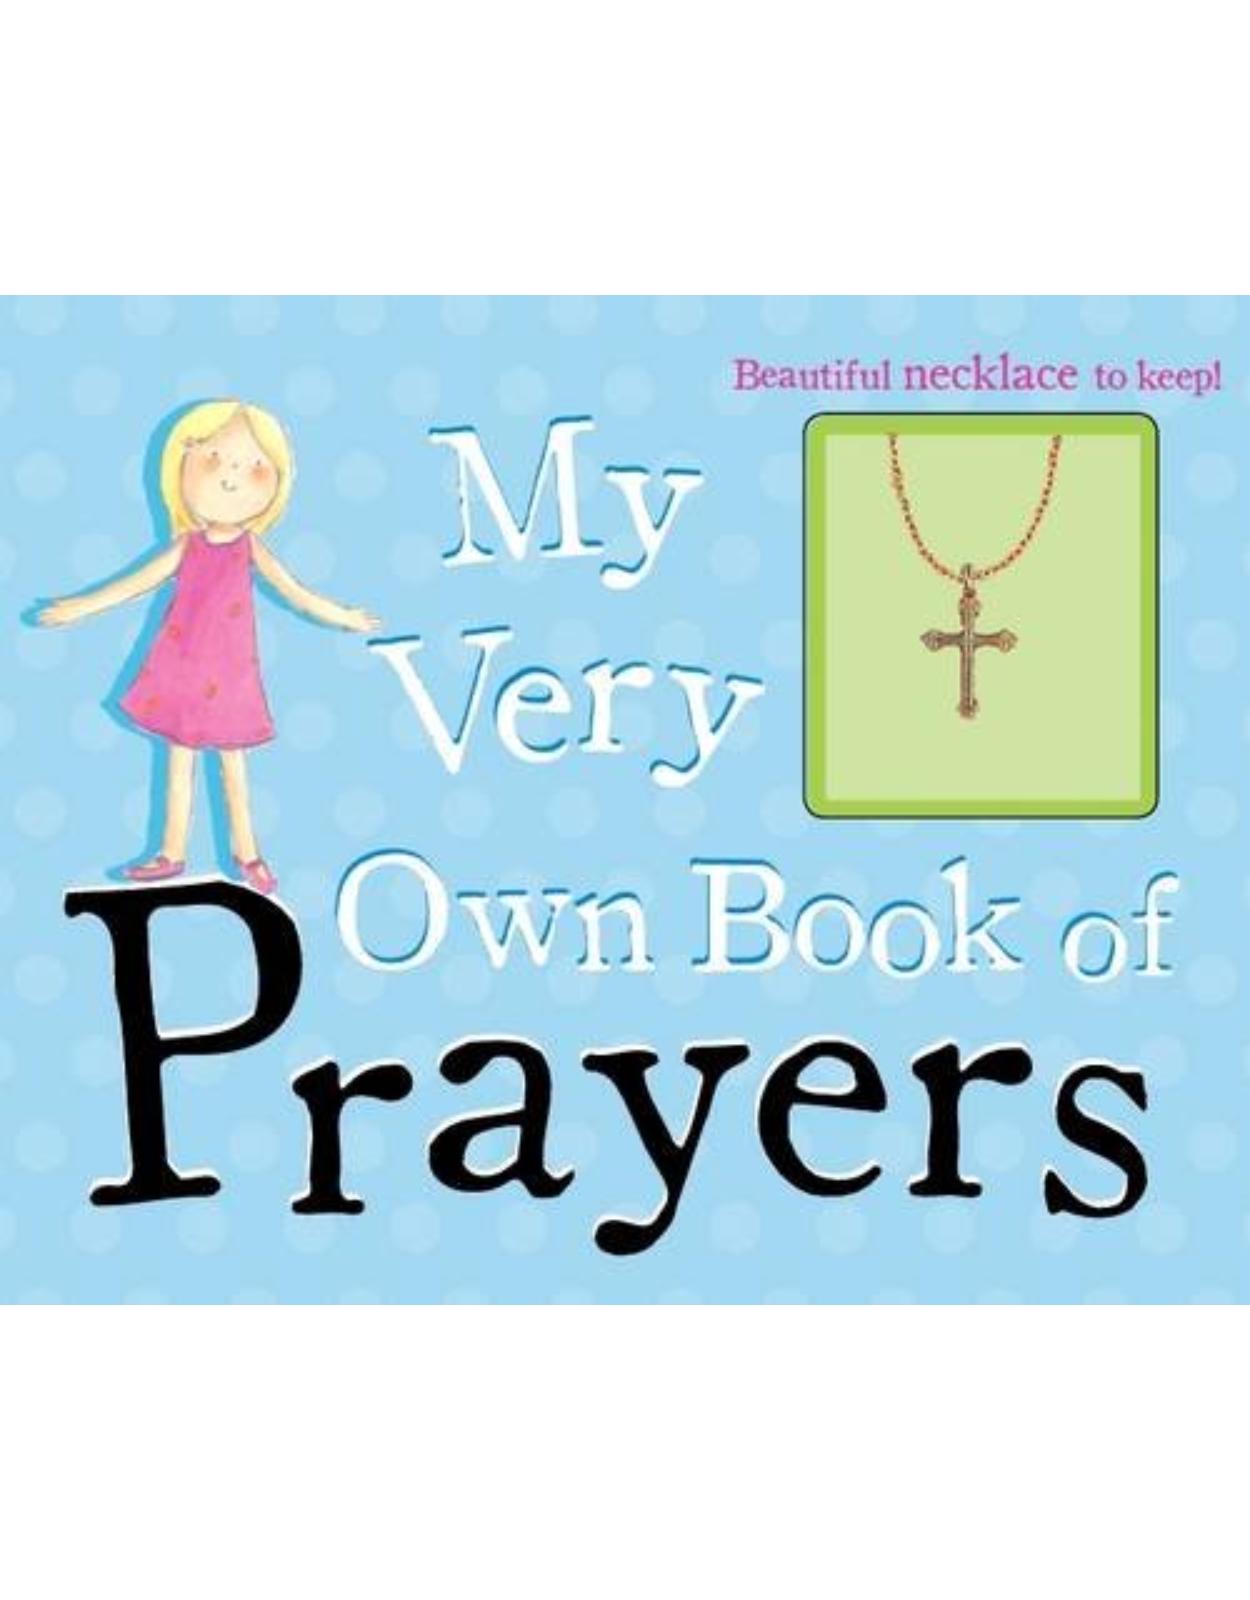 My Little Book Of Prayers